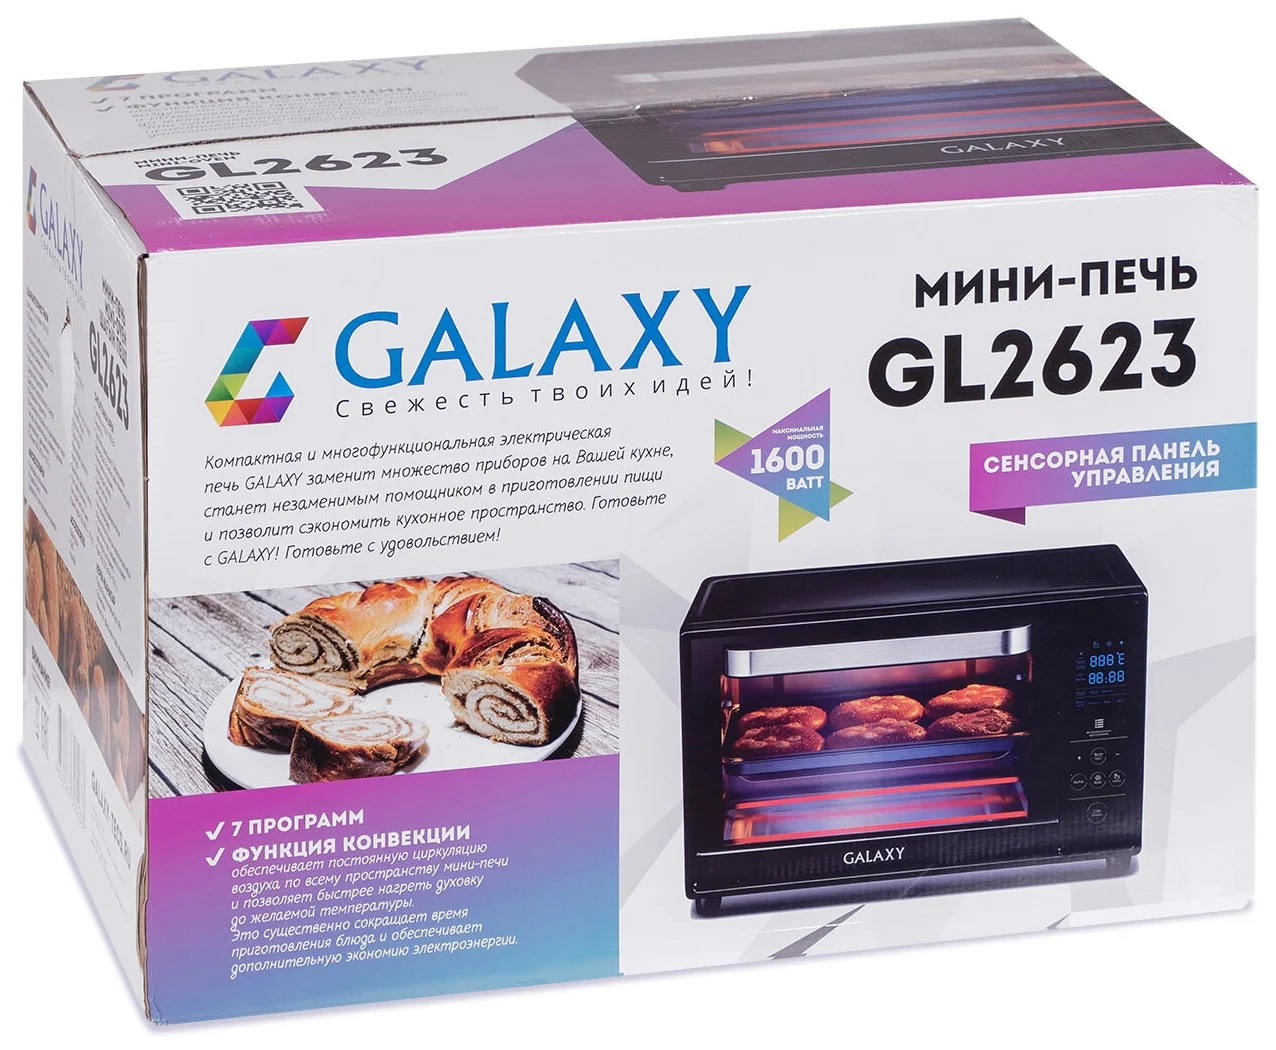 GALAXY GL2623 - материал корпуса: металл